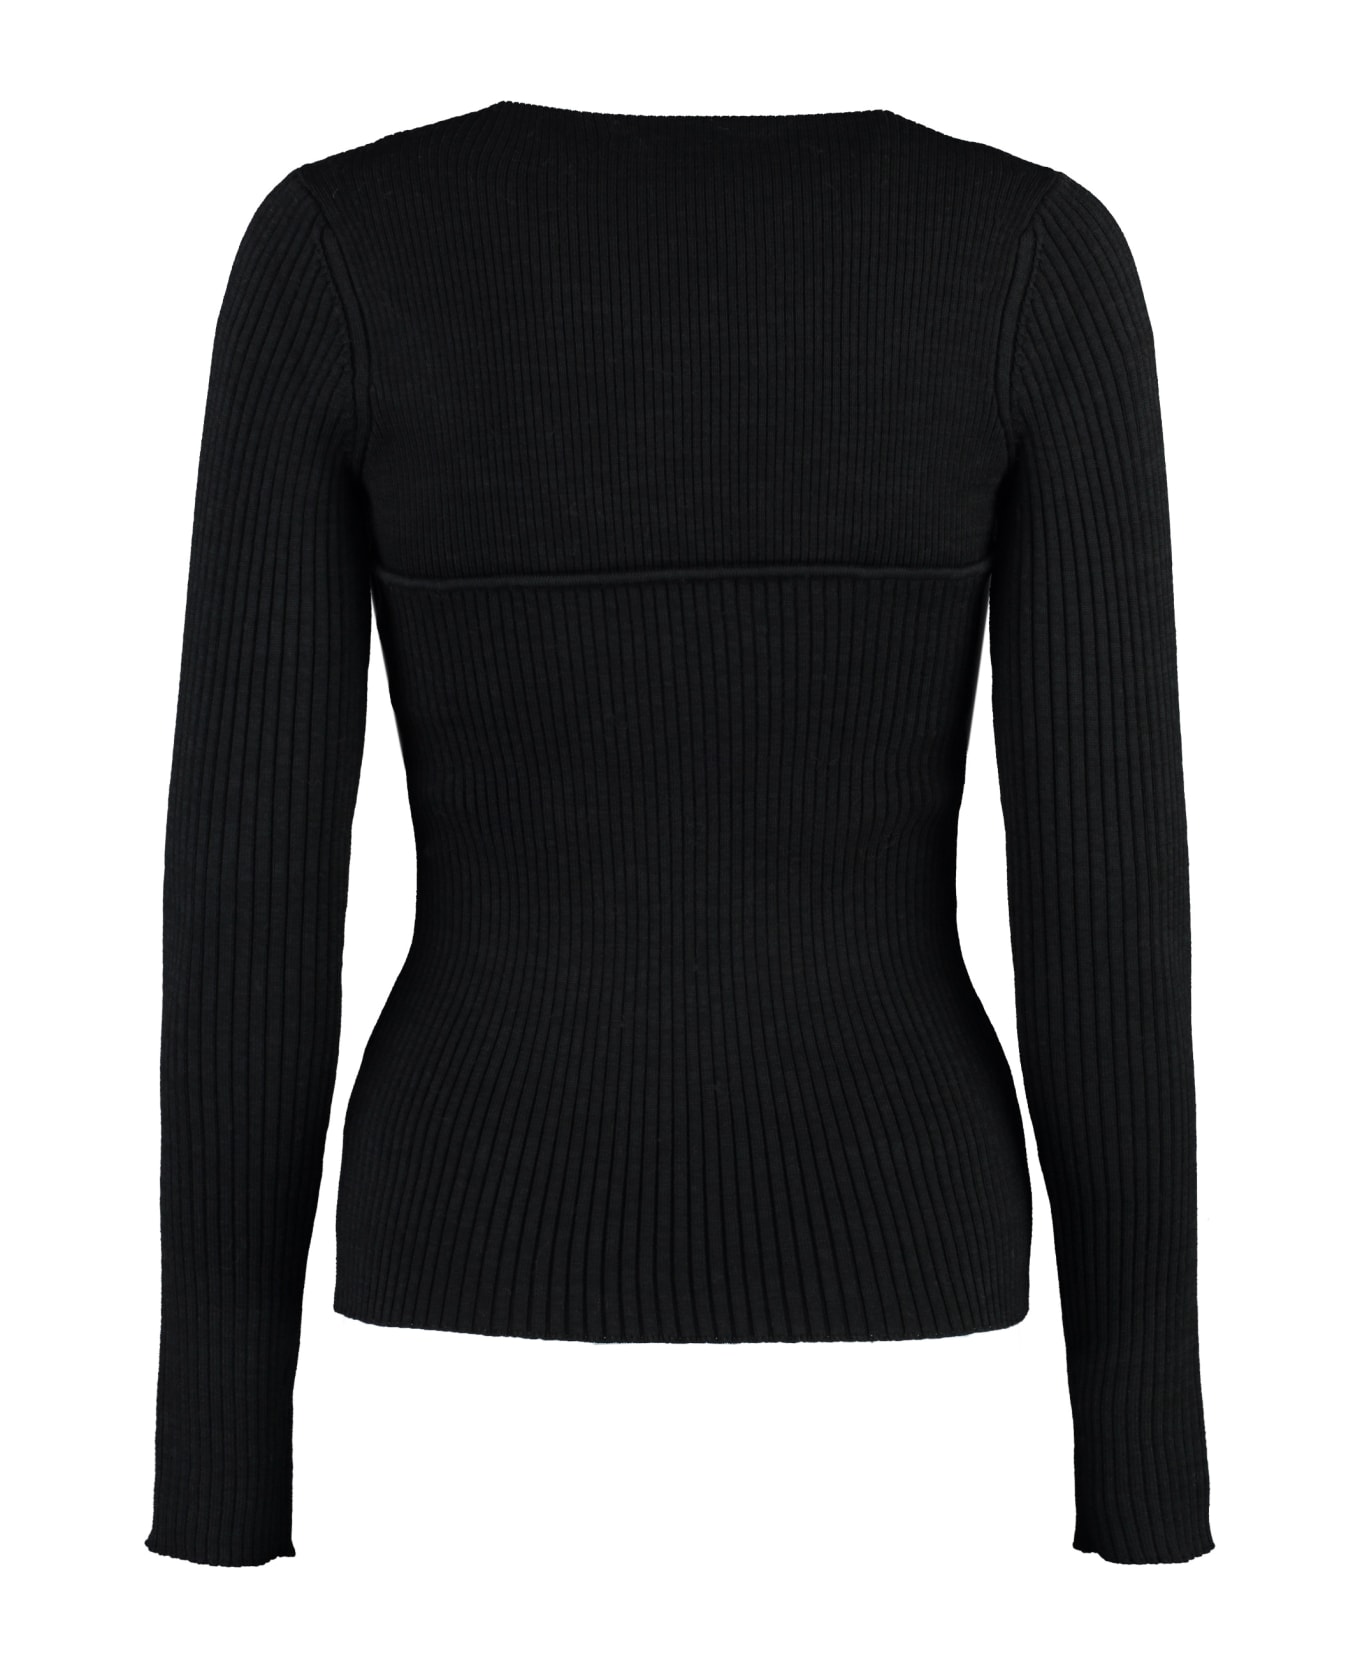 Isabel Marant Zilyae Merino Wool Sweater - black ニットウェア